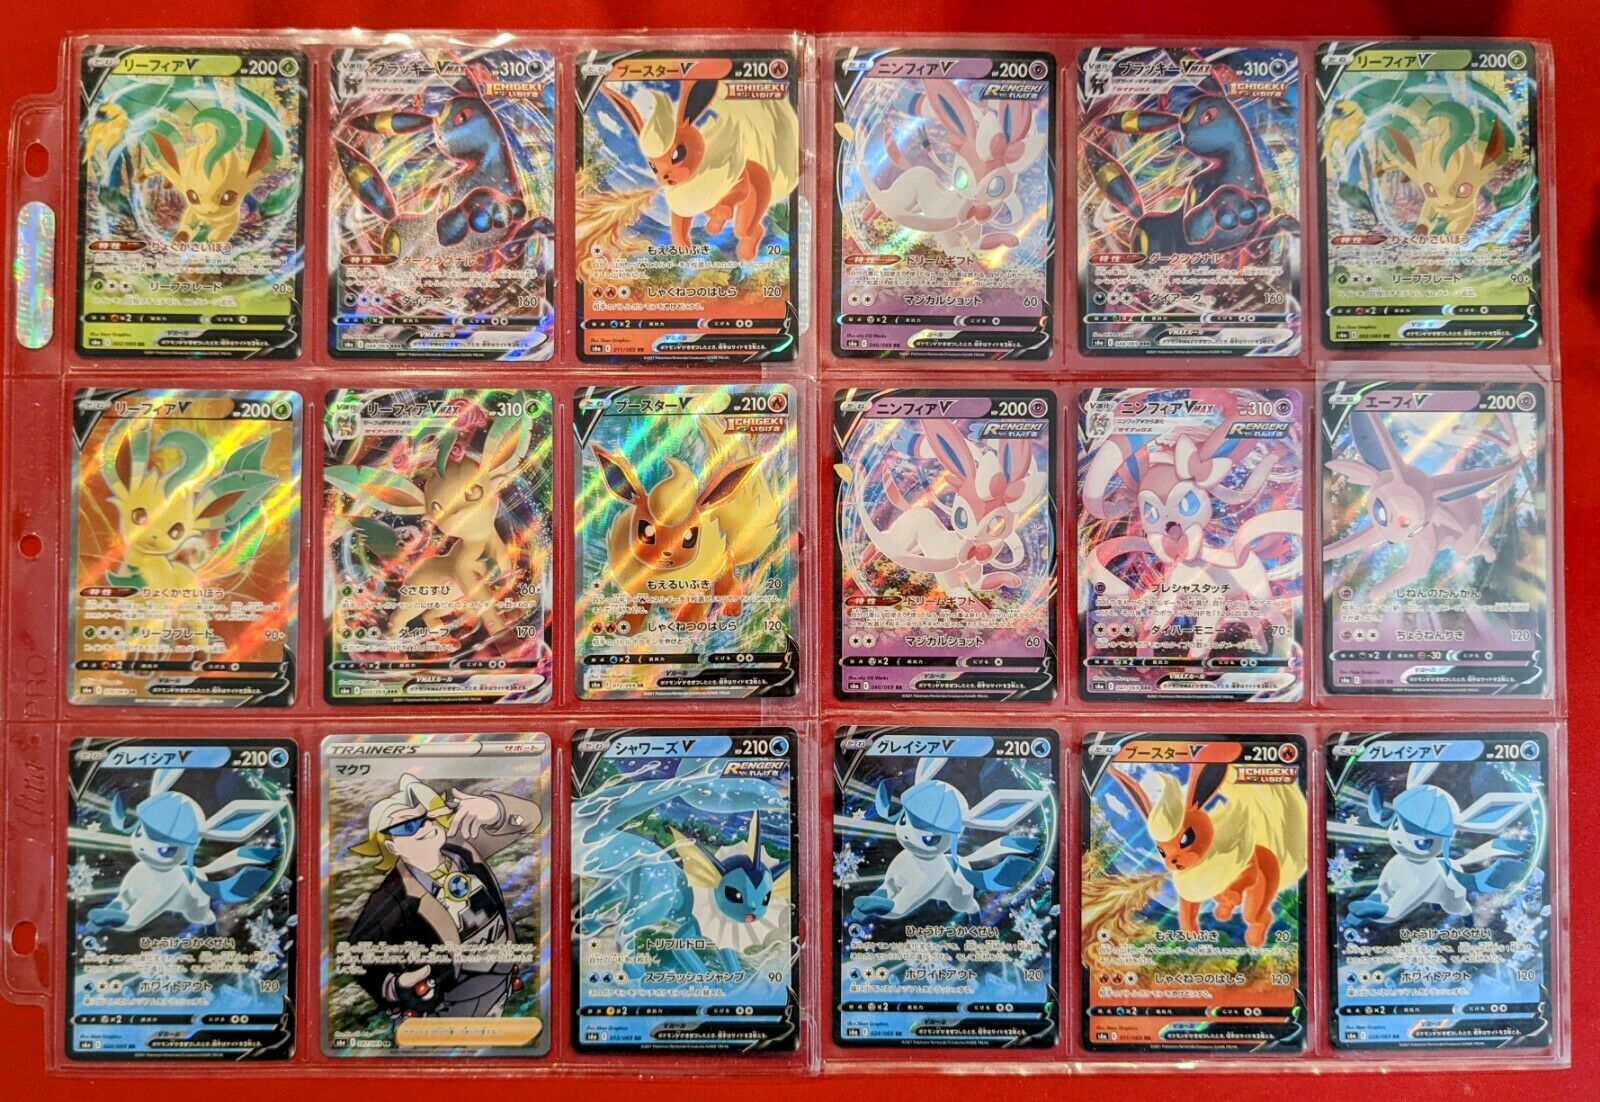 Are Japanese Pokémon Cards Valuable & Worth Buying?